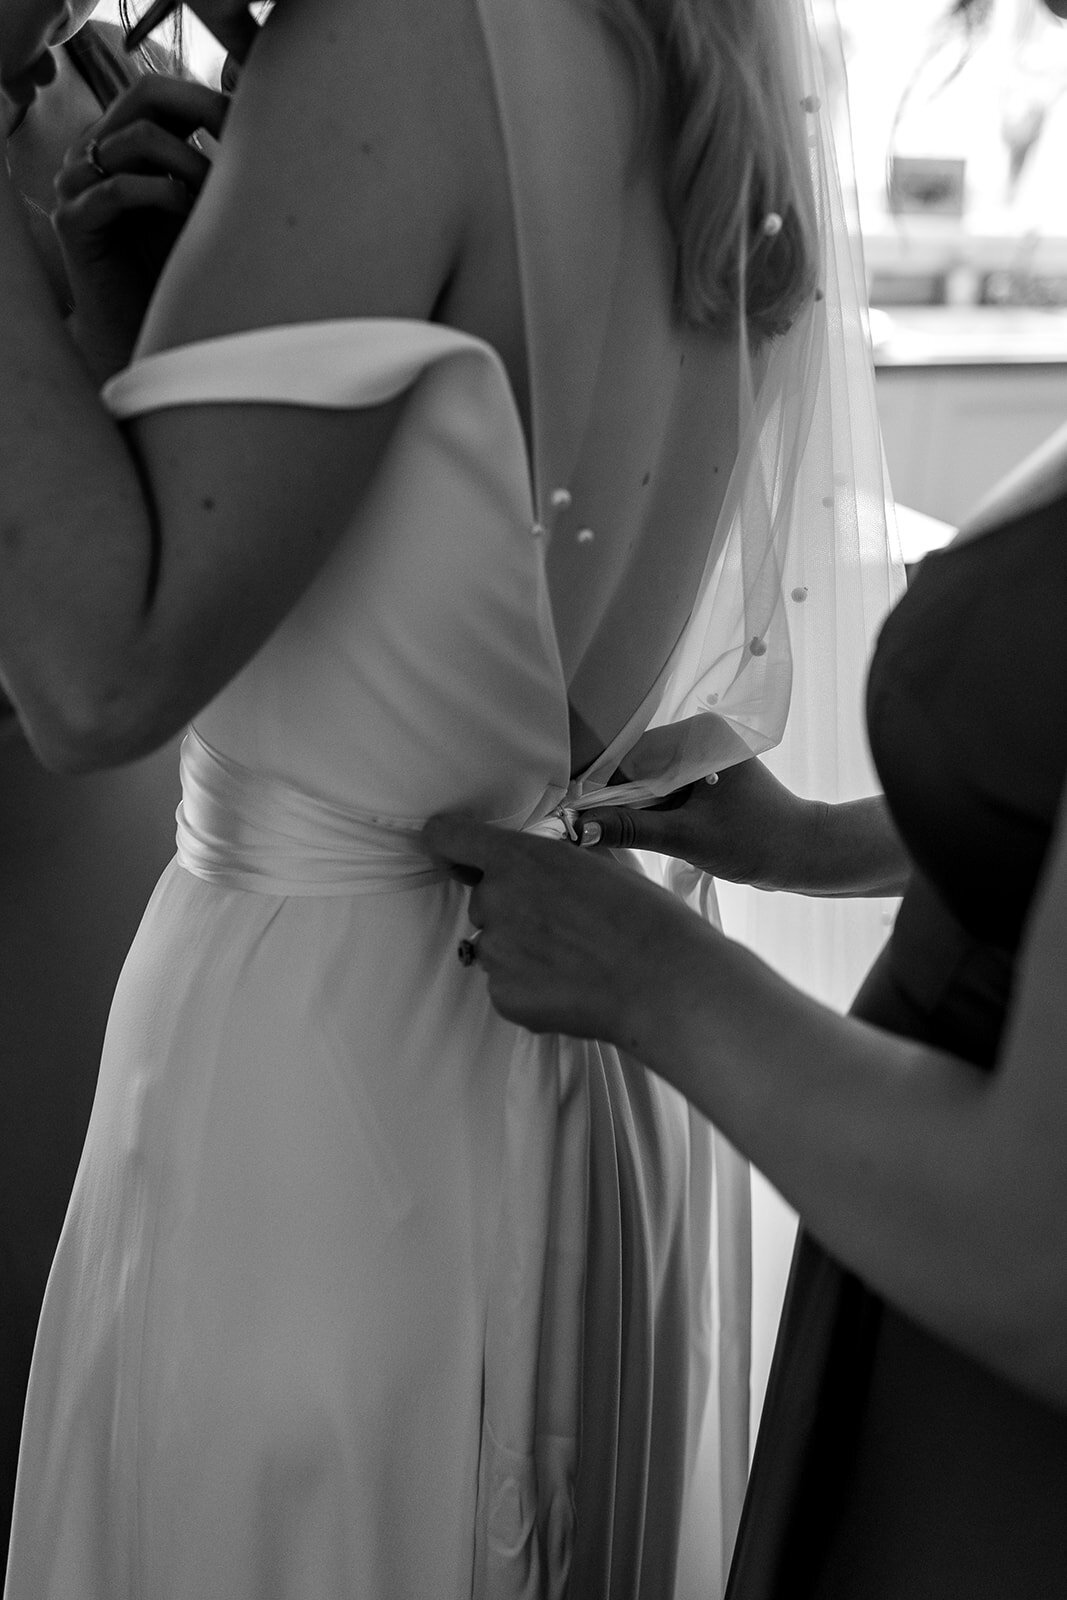 suffolk-wedding-photographer-marqueewedding13